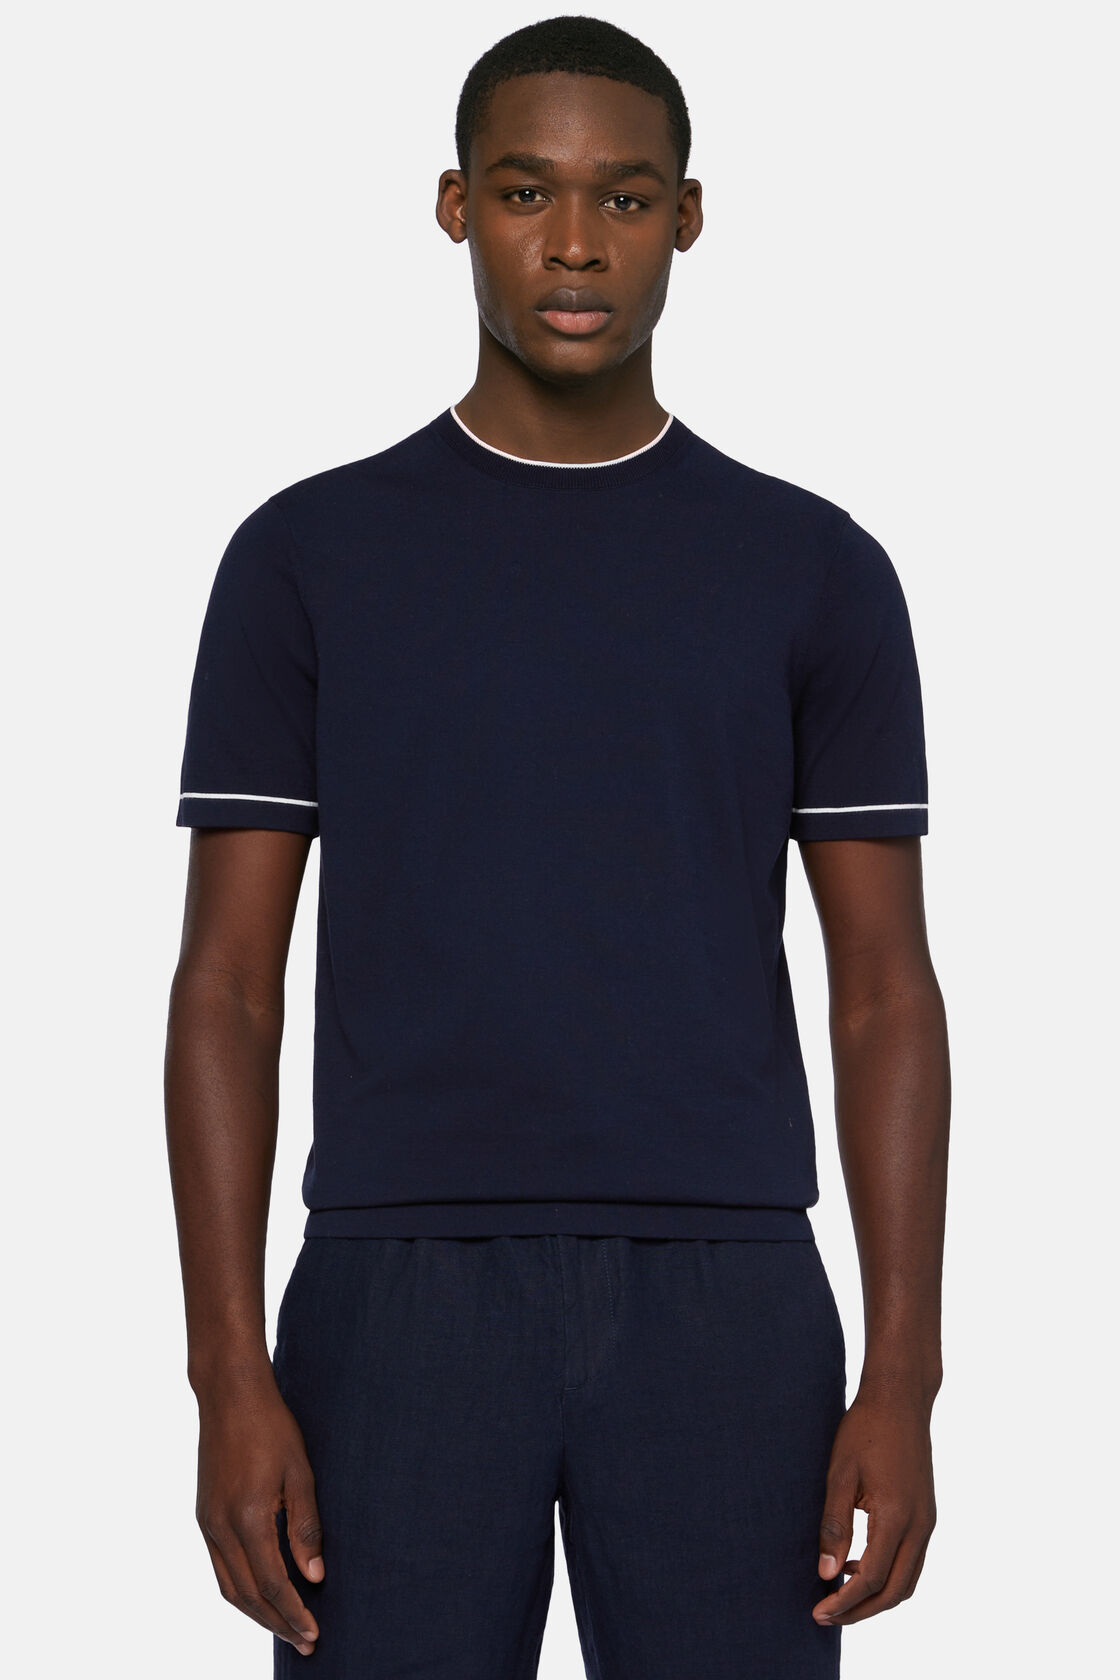 Marineblaues Strick-T-Shirt Aus Baumwollkrepp, Navy blau, hi-res